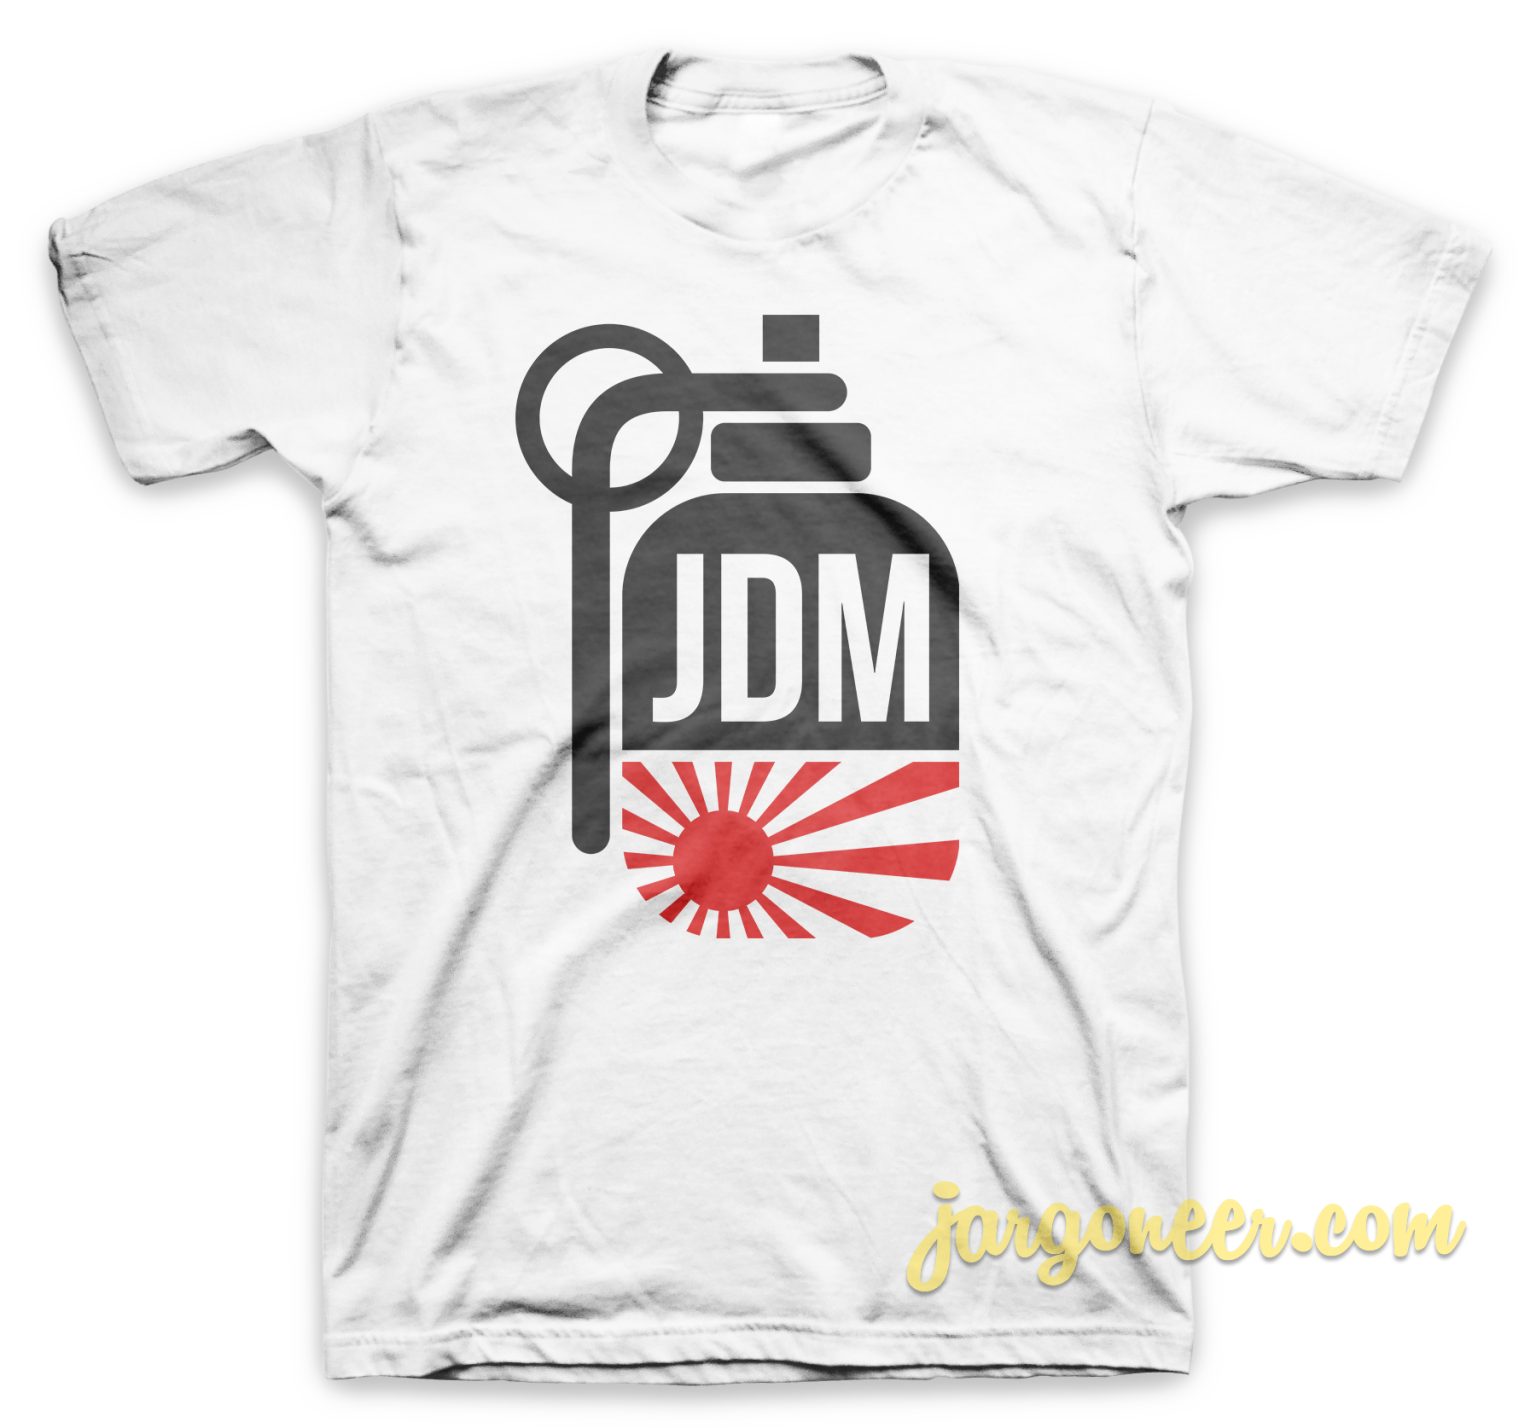 jdm shirt designs